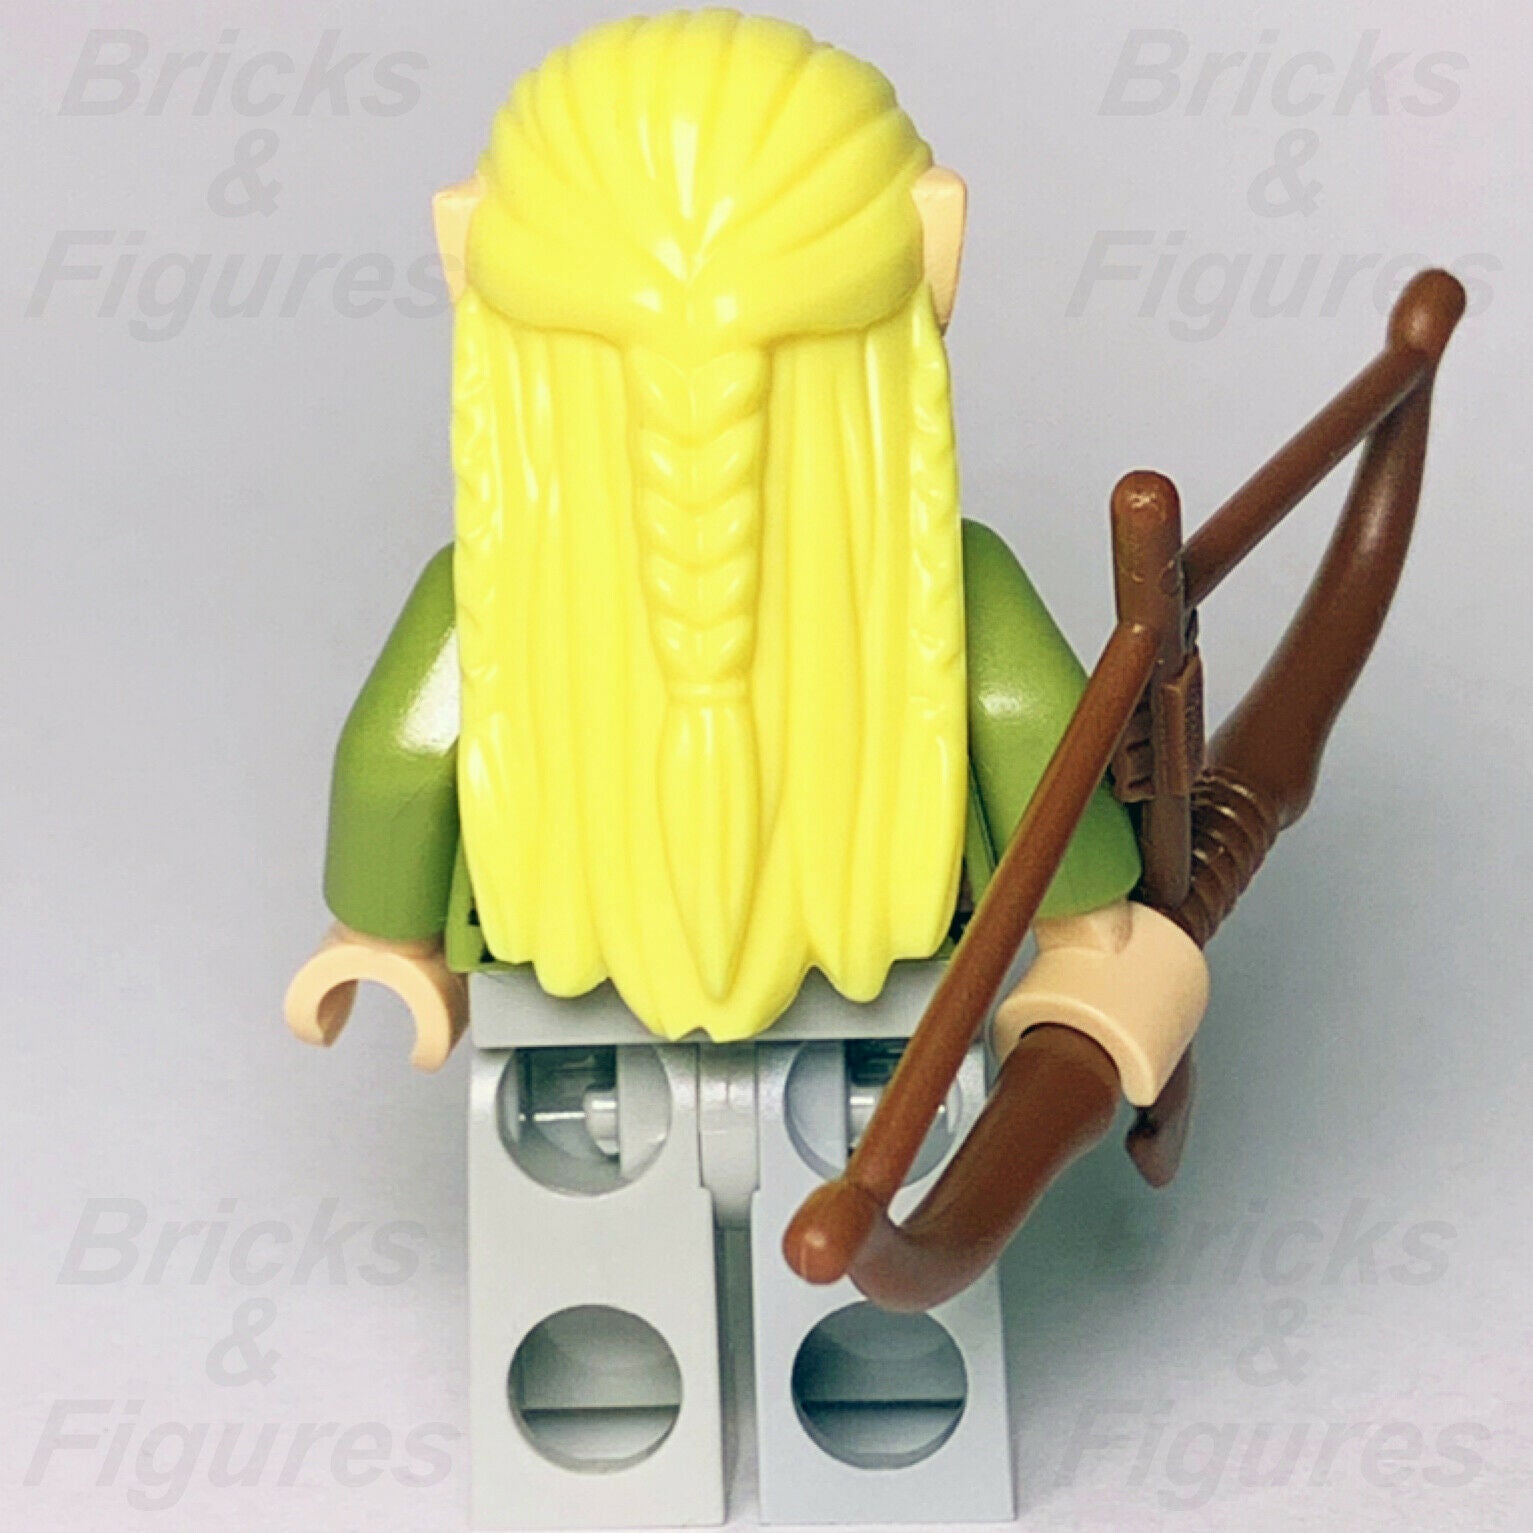 LEGO the Hobbit & lord of the rings LEGOLAS GREENLEAF elf GENUINE new 79008 9473 - Bricks & Figures